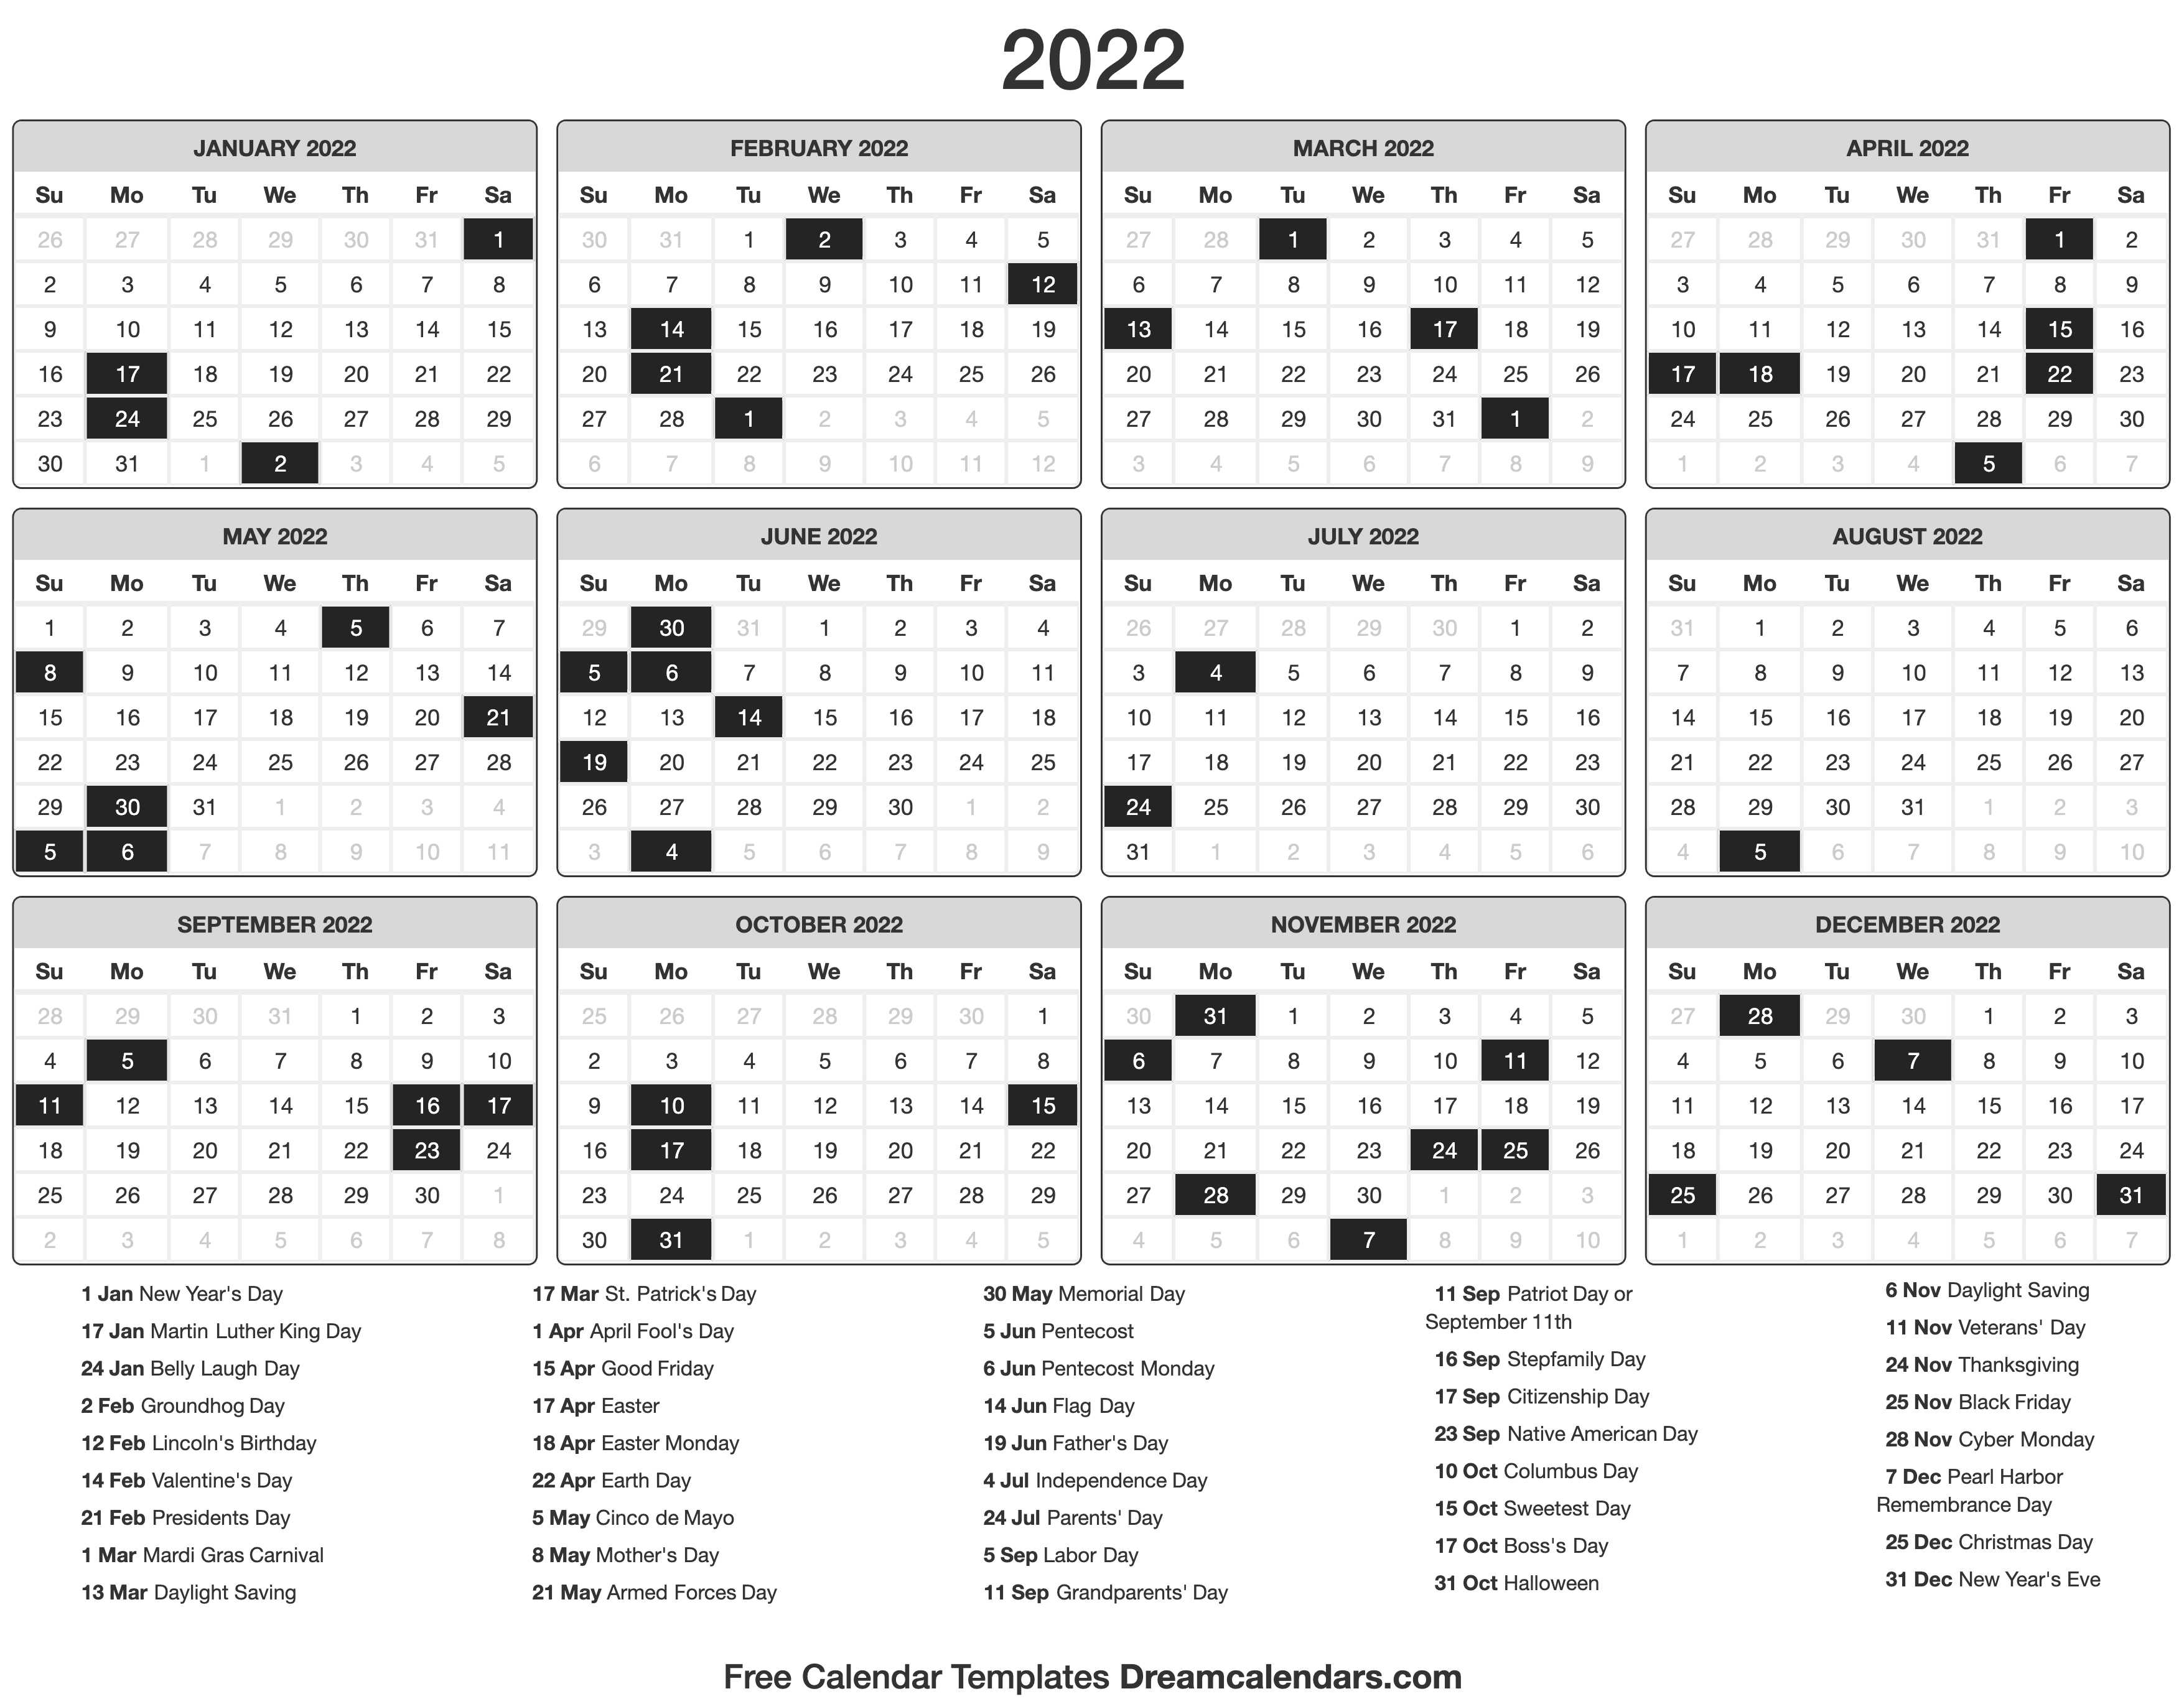 Ford Motor Company Holiday Calendar 2022 2022 Calendar